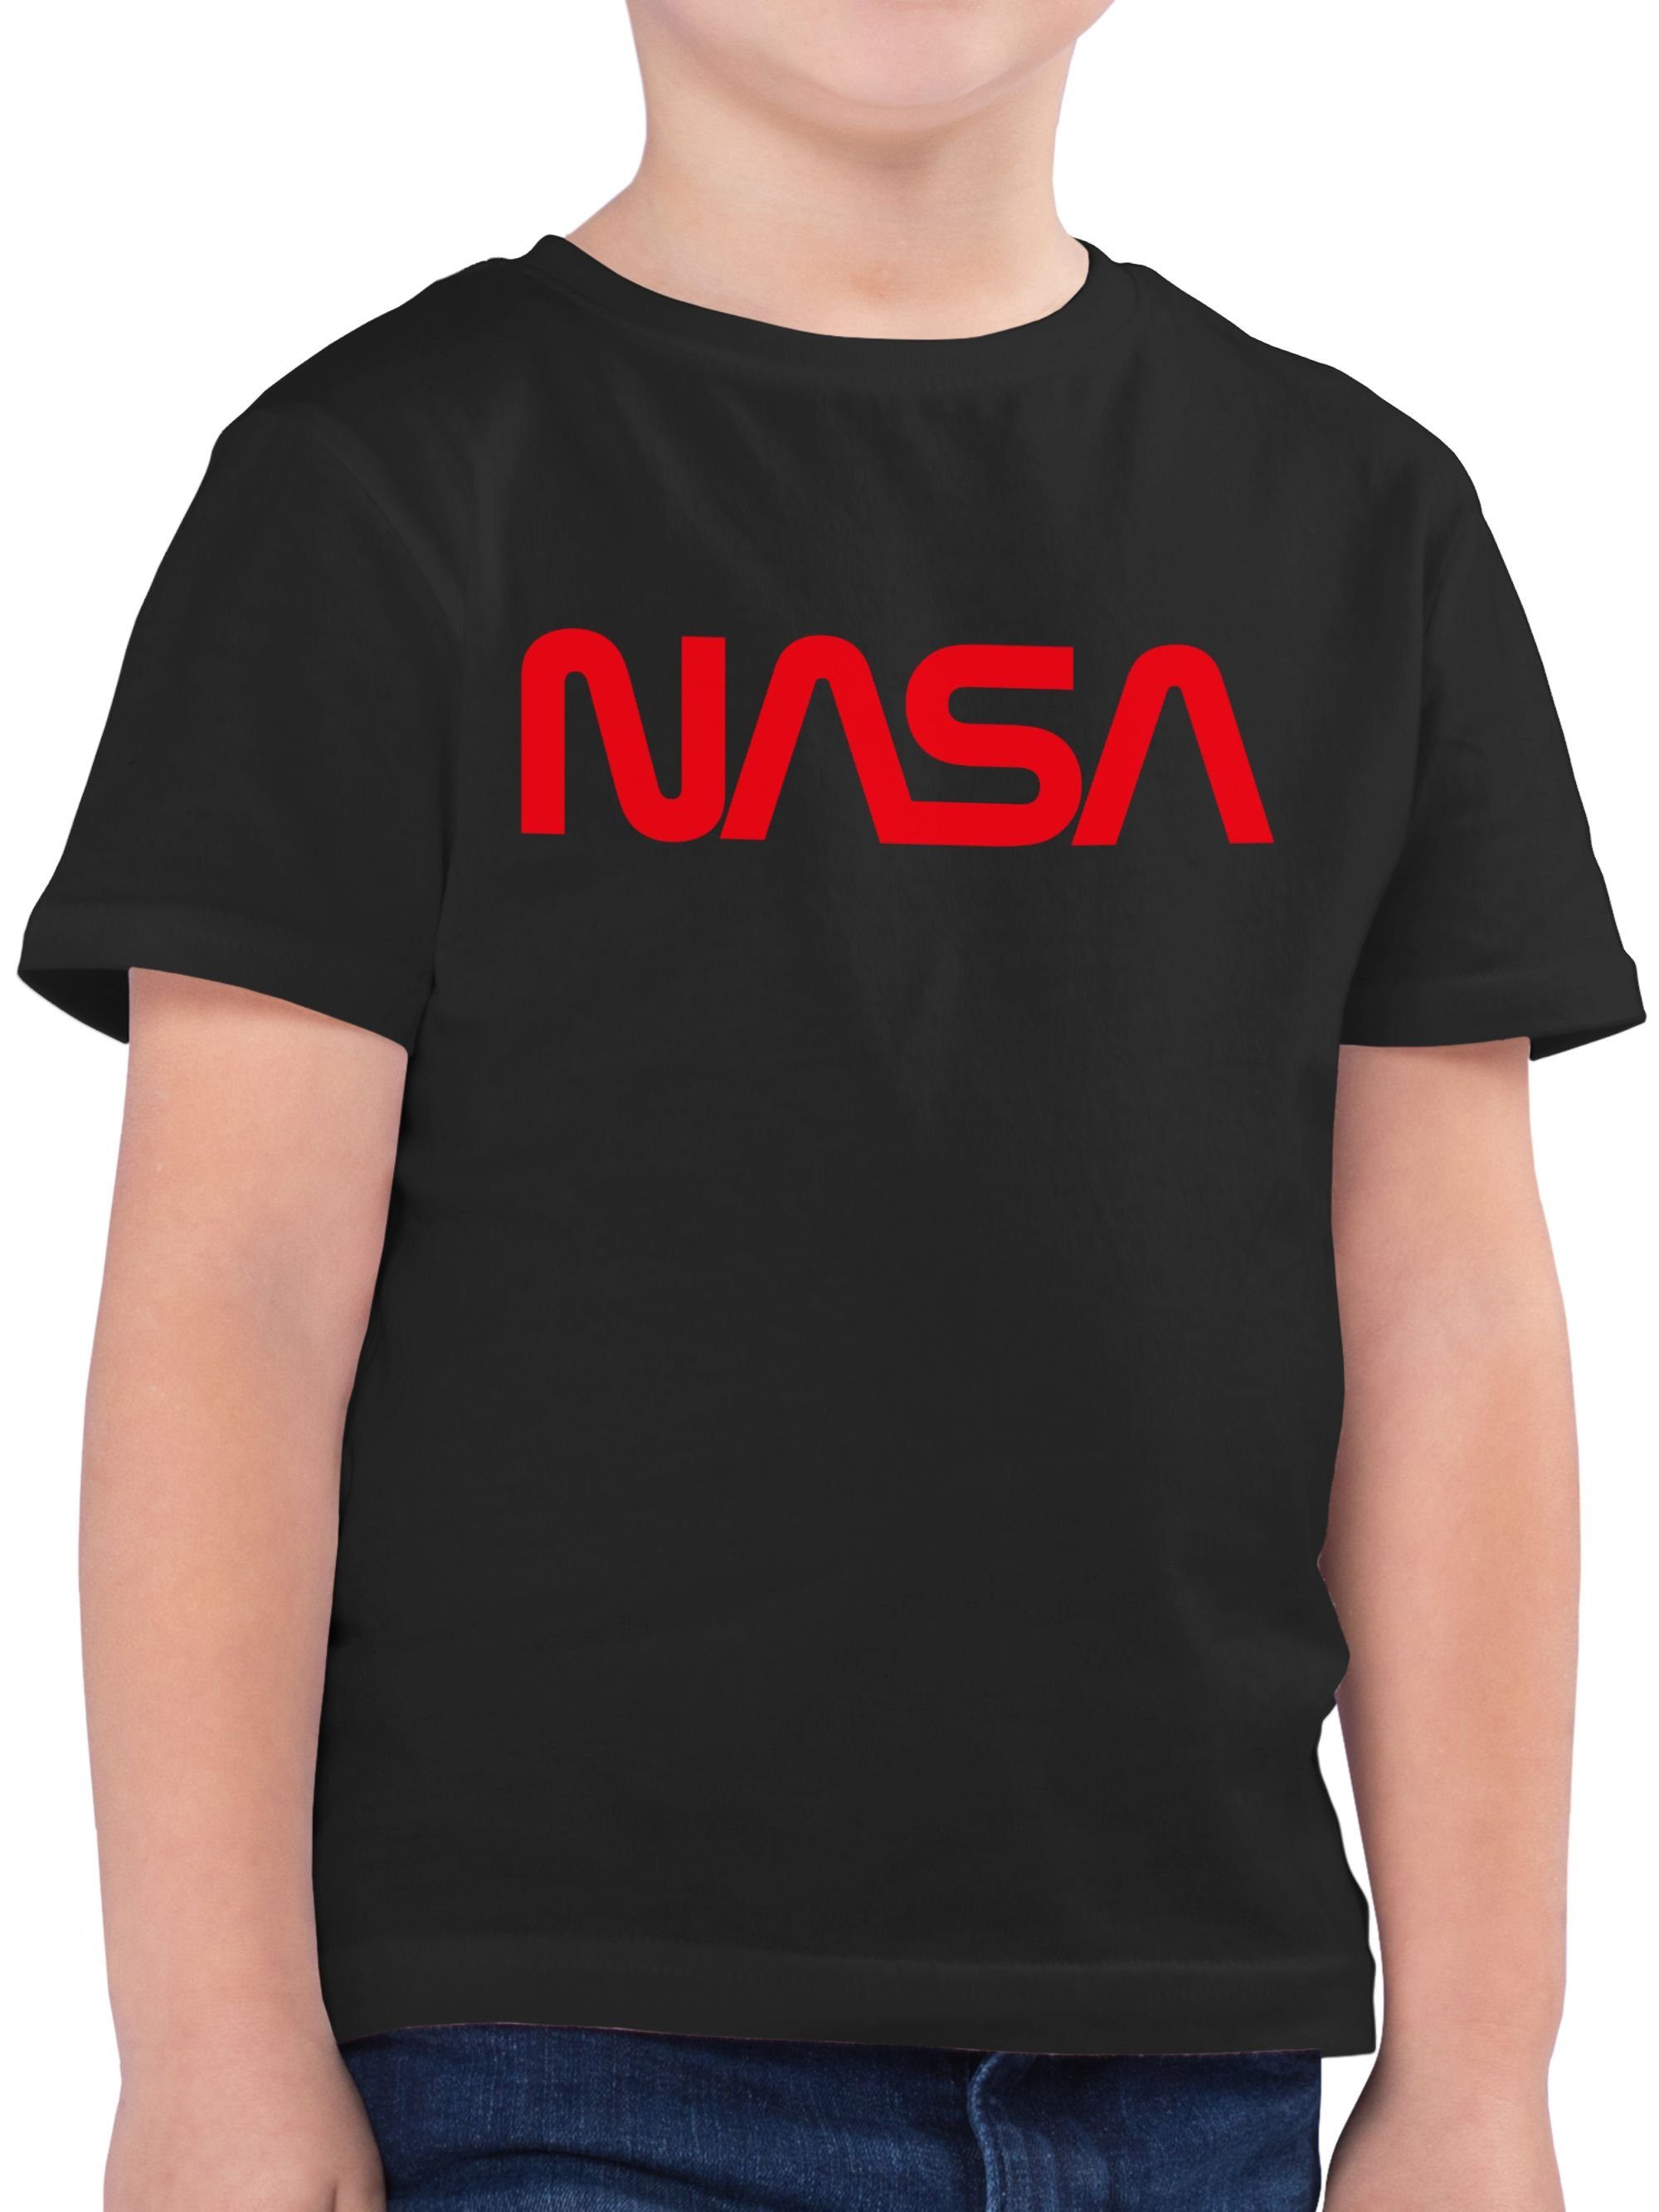 Shirtracer T-Shirt Nasa - Raumfahrt Astronaut Mondlandung Weltraum Kinderkleidung und Co 2 Schwarz